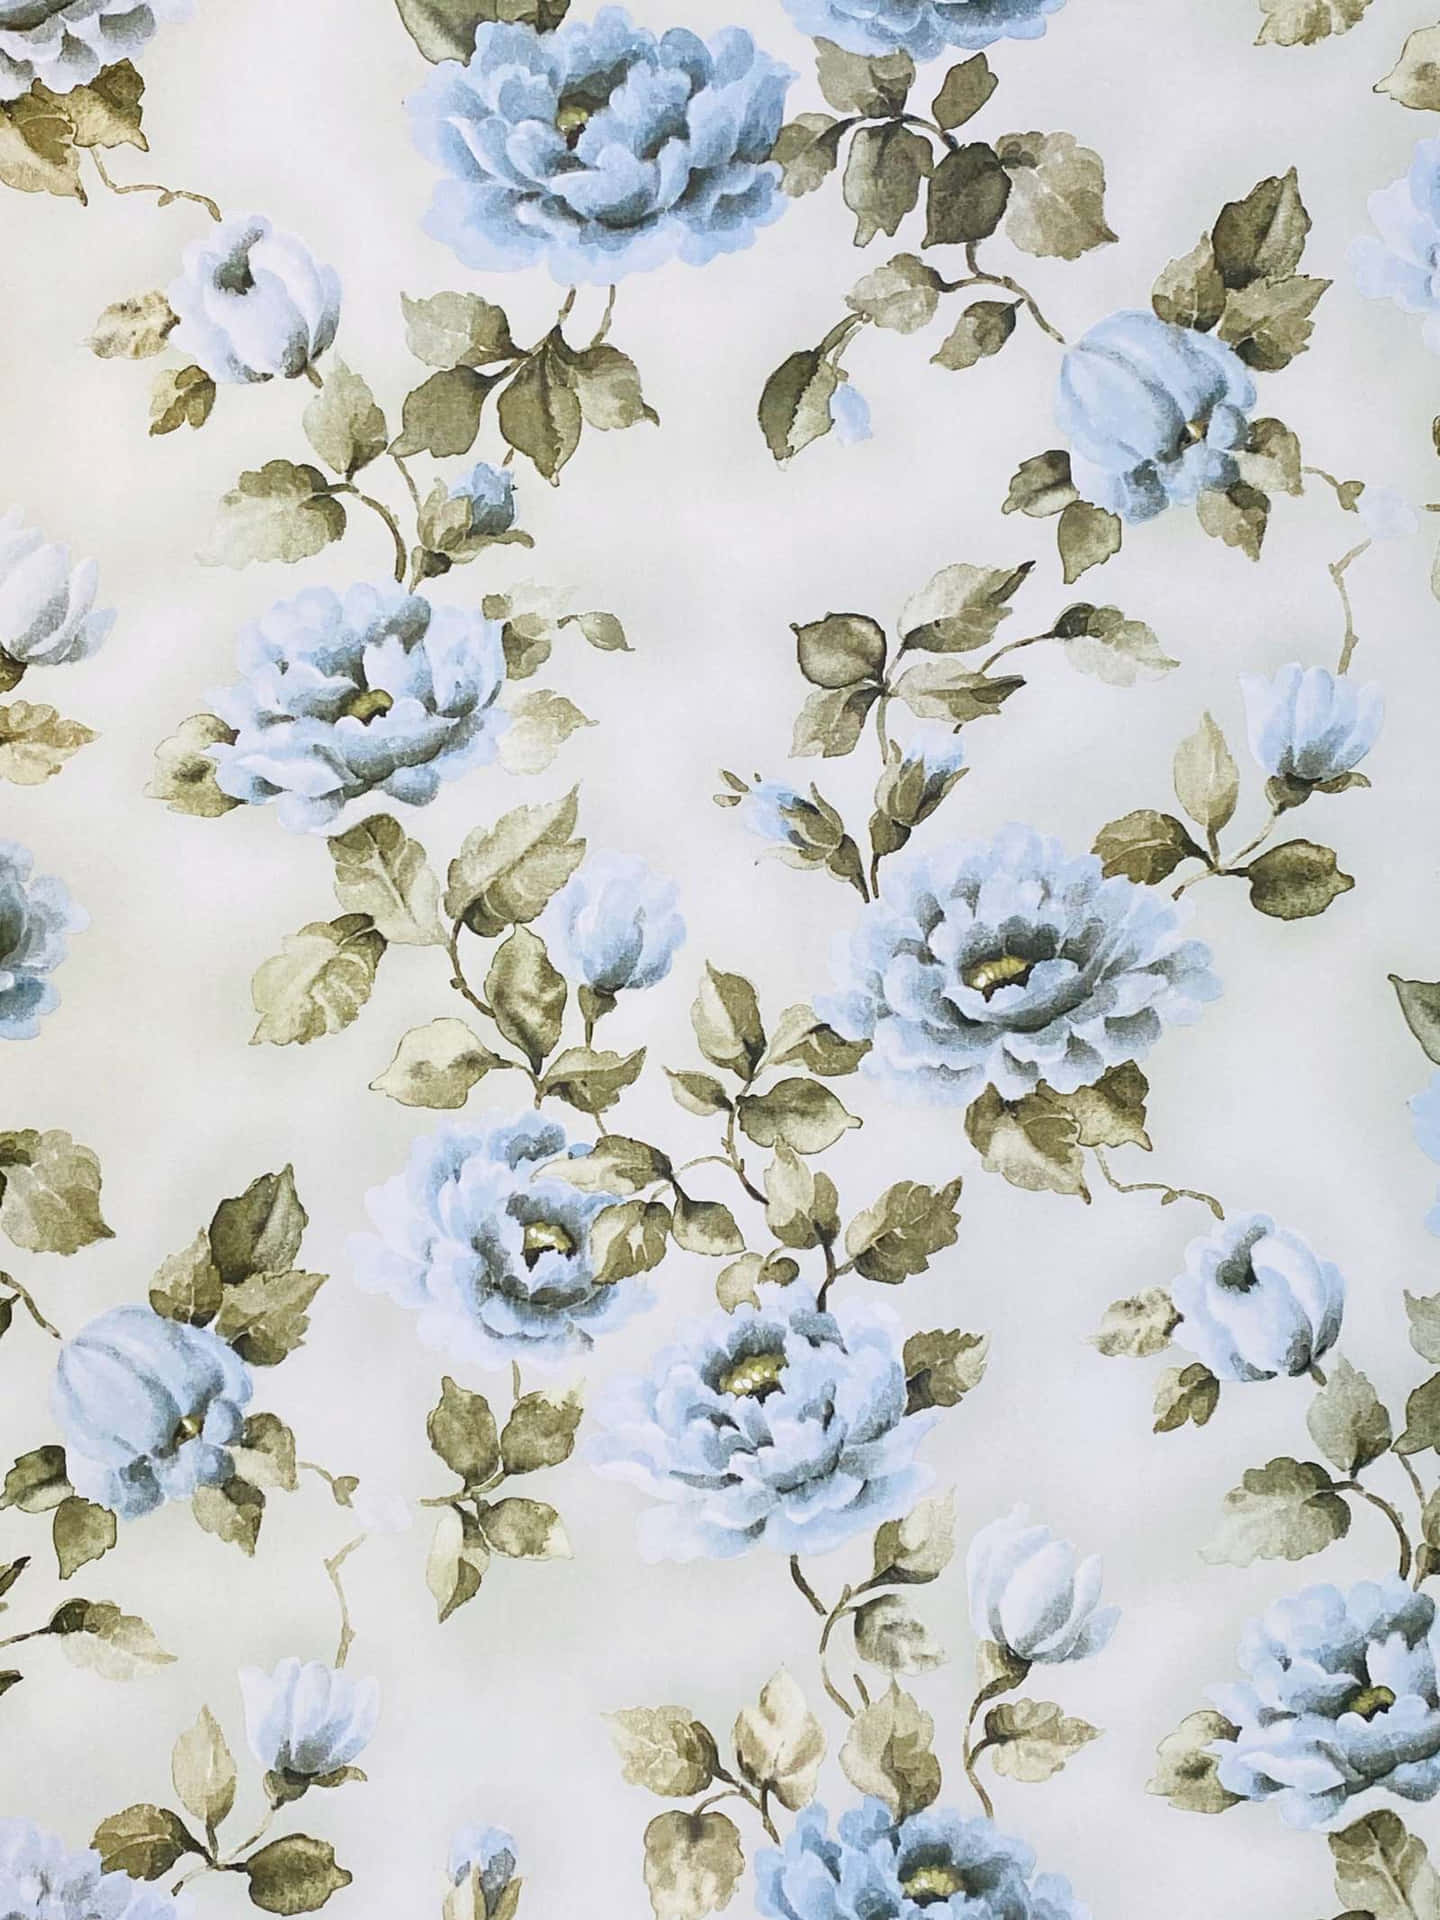 Delikate men modige blå blomster danser i vinden. Wallpaper